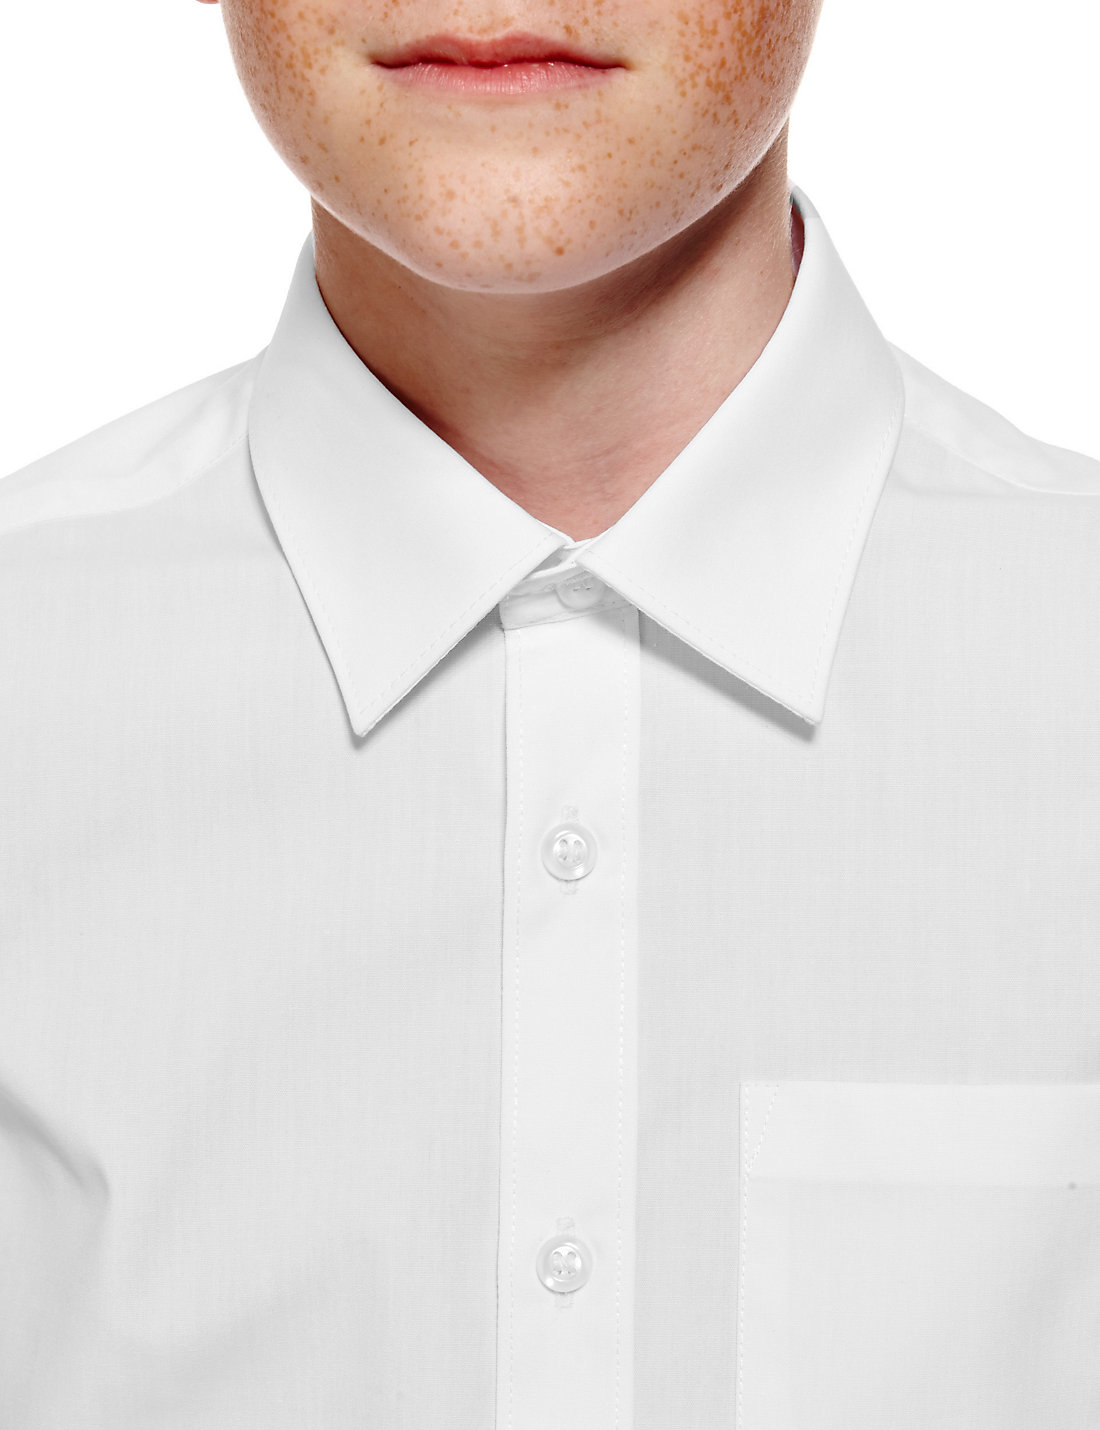 huella dactilar resistencia Red de comunicacion Fabricante de camisas escolares manga larga personalizadas para uniformes  escolares de colegios - Uniformes escolares camisas Pronens | Pronens